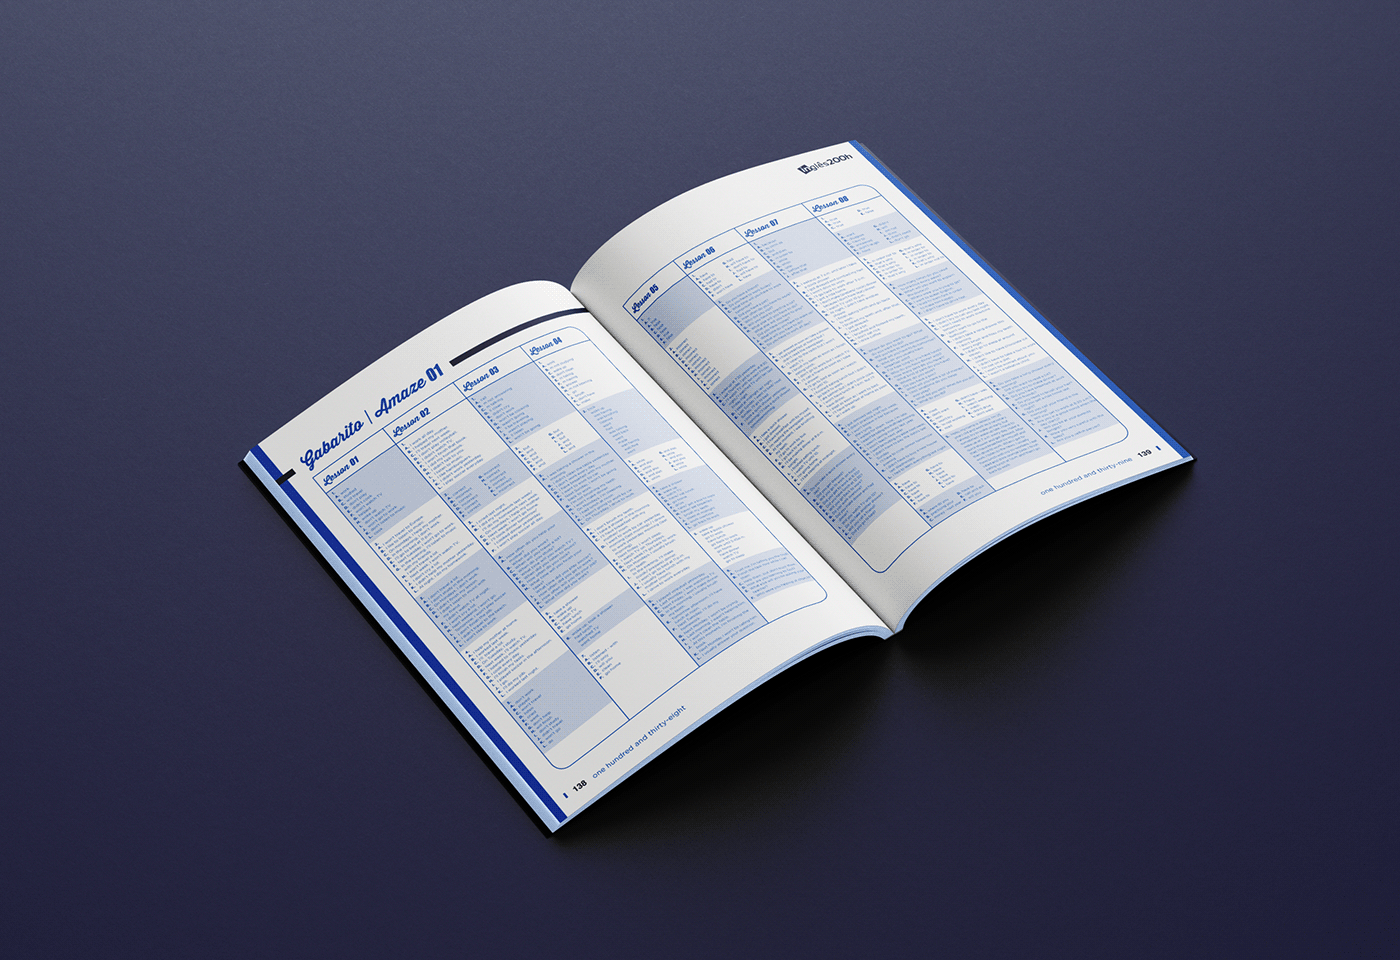 Adobe InDesign book design book illustration exercise book Vector Illustration